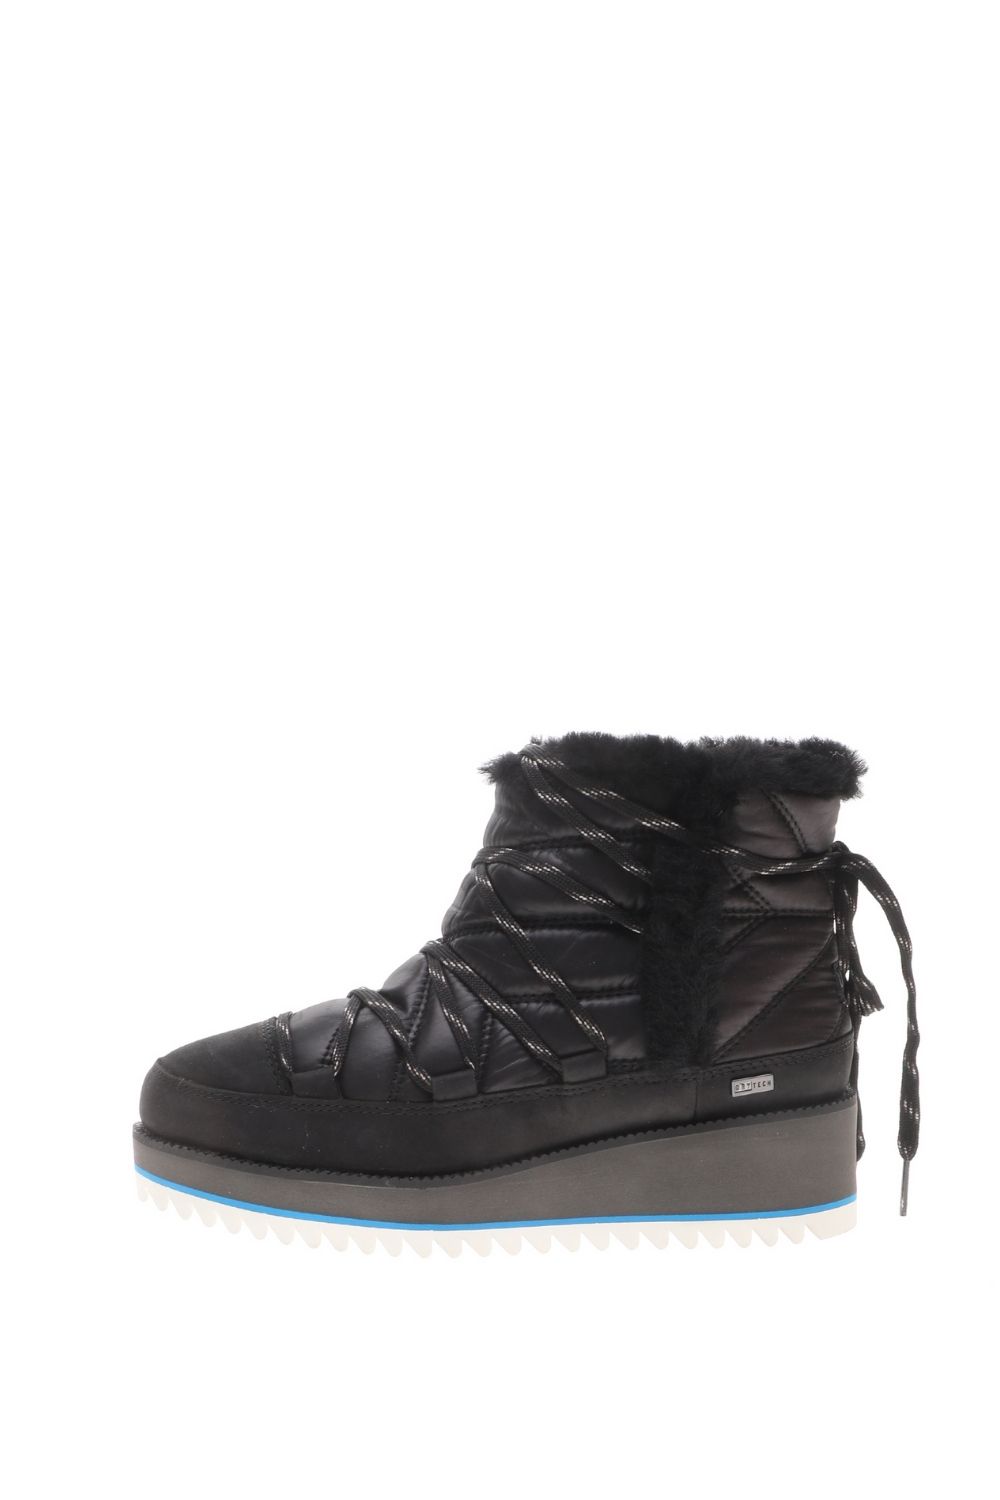 UGG - Γυναικεία μποτάκια UGG Cayden Boot μαύρα Γυναικεία/Παπούτσια/Μπότες-Μποτάκια/Μποτάκια